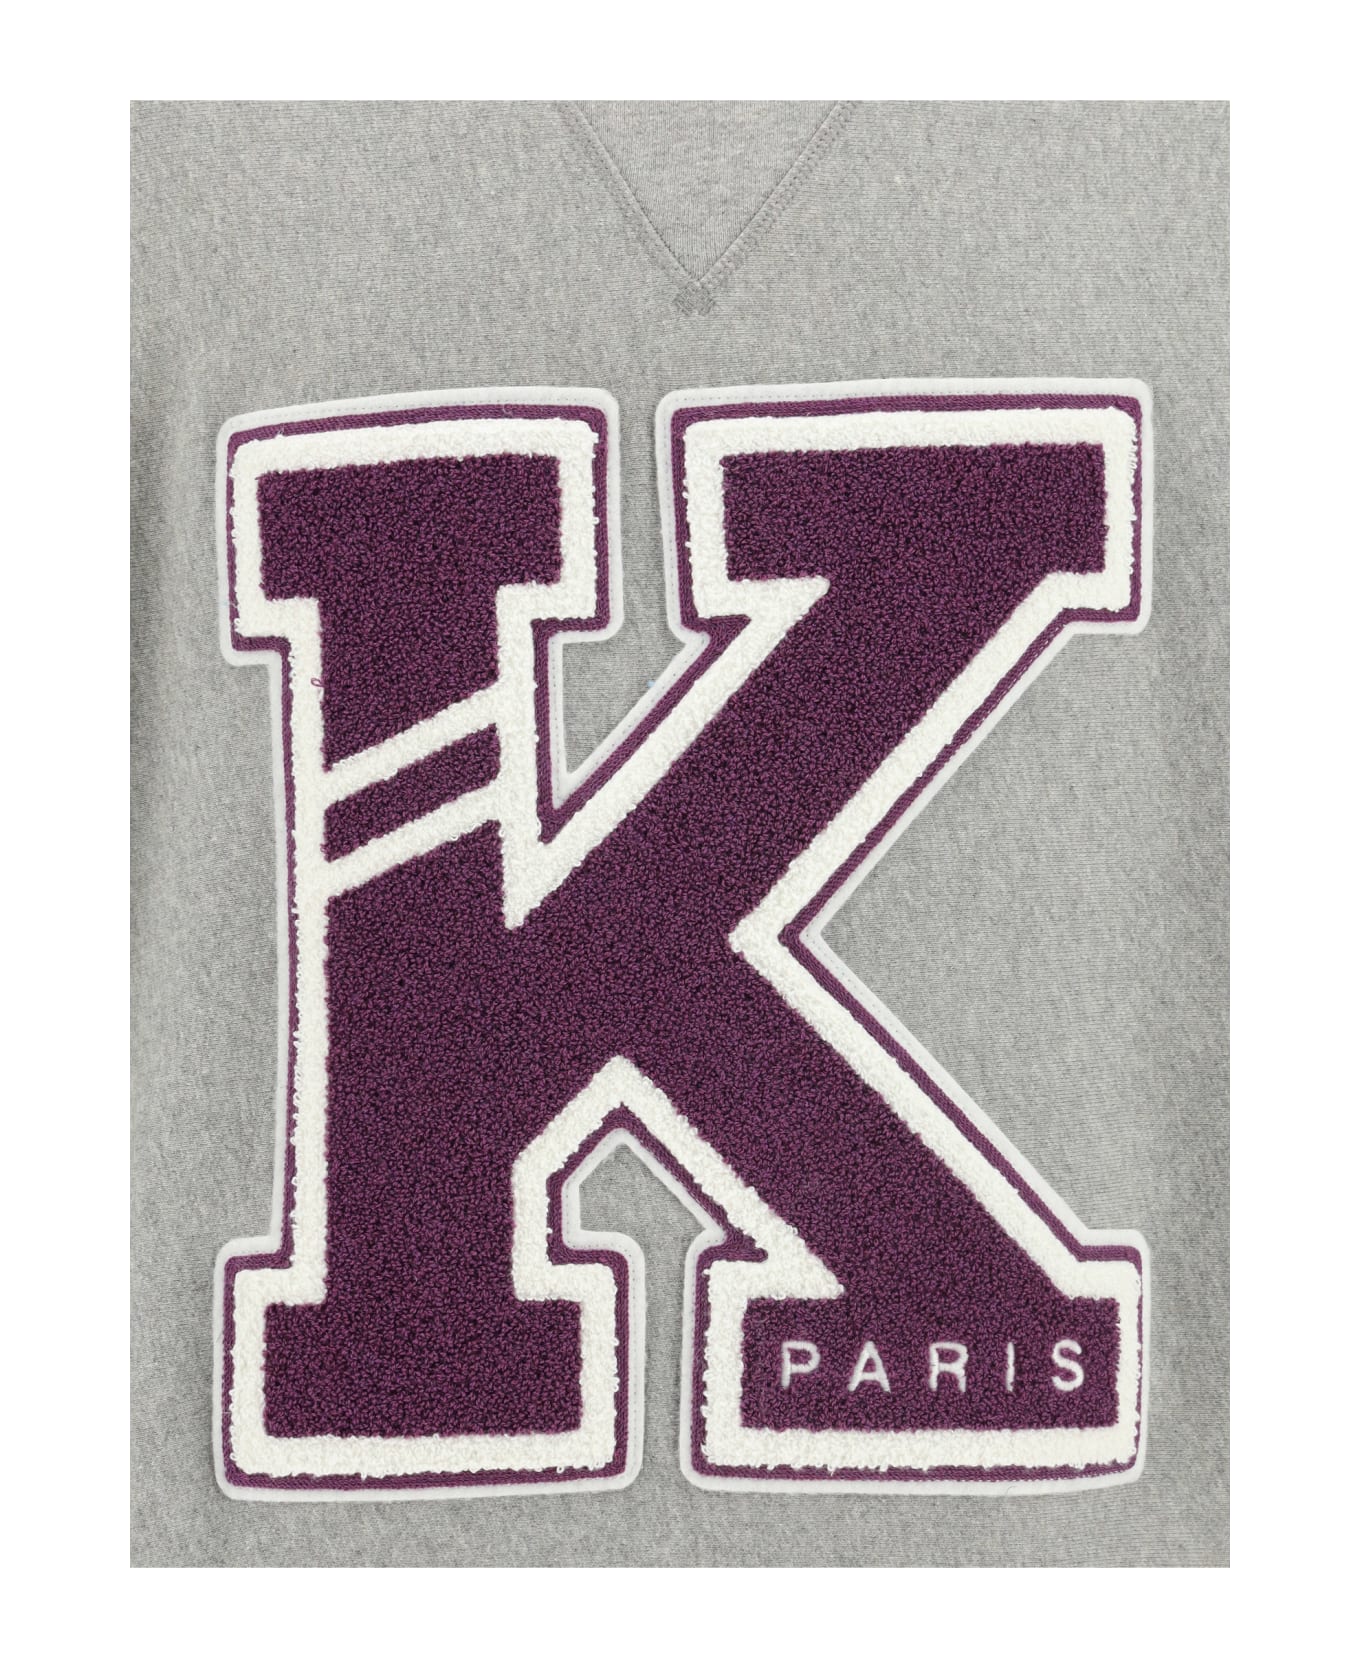 Kenzo Cotton Varsity Sweatshirt - grey フリース